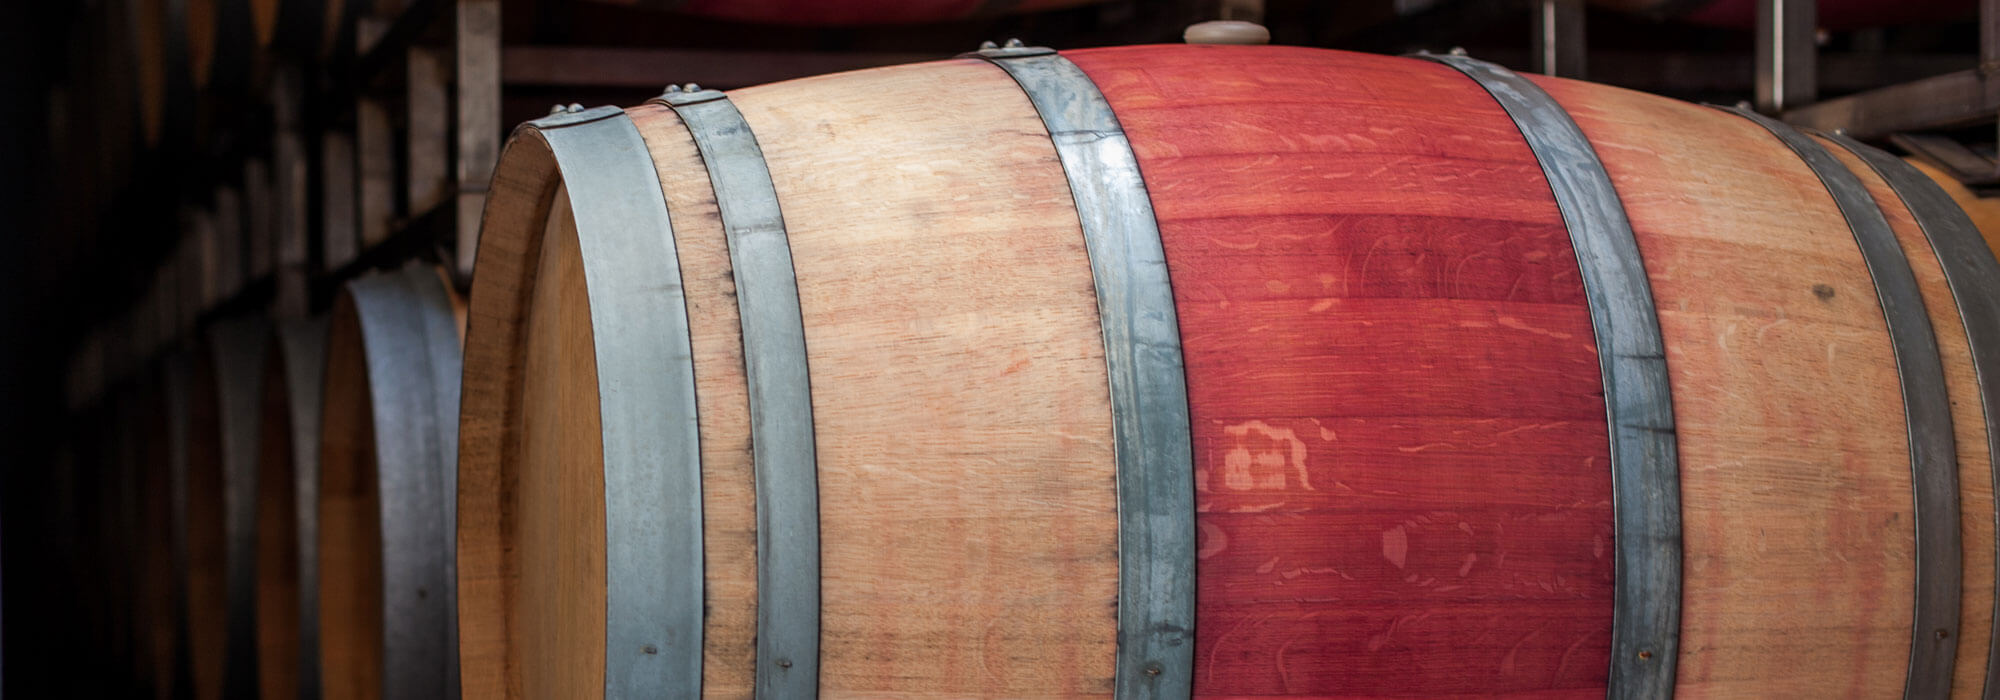 Wine Barrels at Novelty Hill-Januik Winery